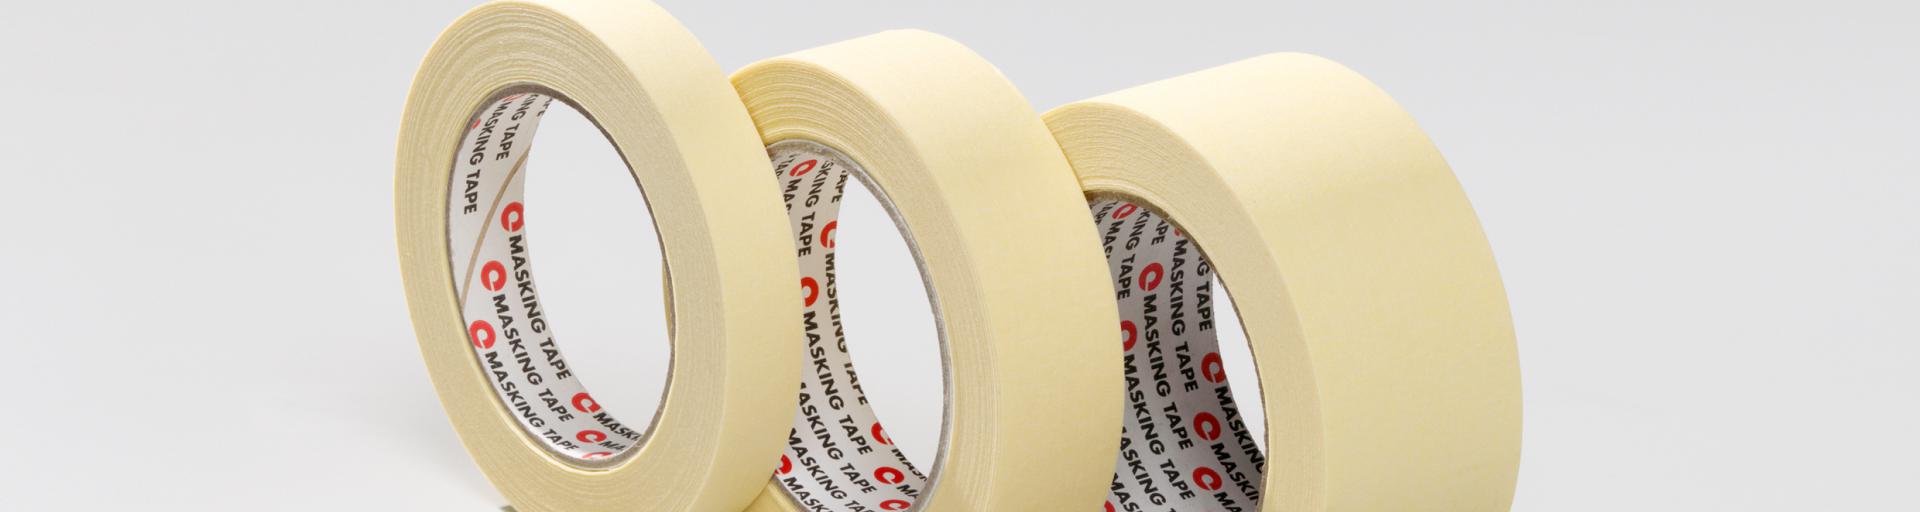 JDEL Masking Paper Tape 50 m x 30 mm 10 Rolls Tower Cream 30x50